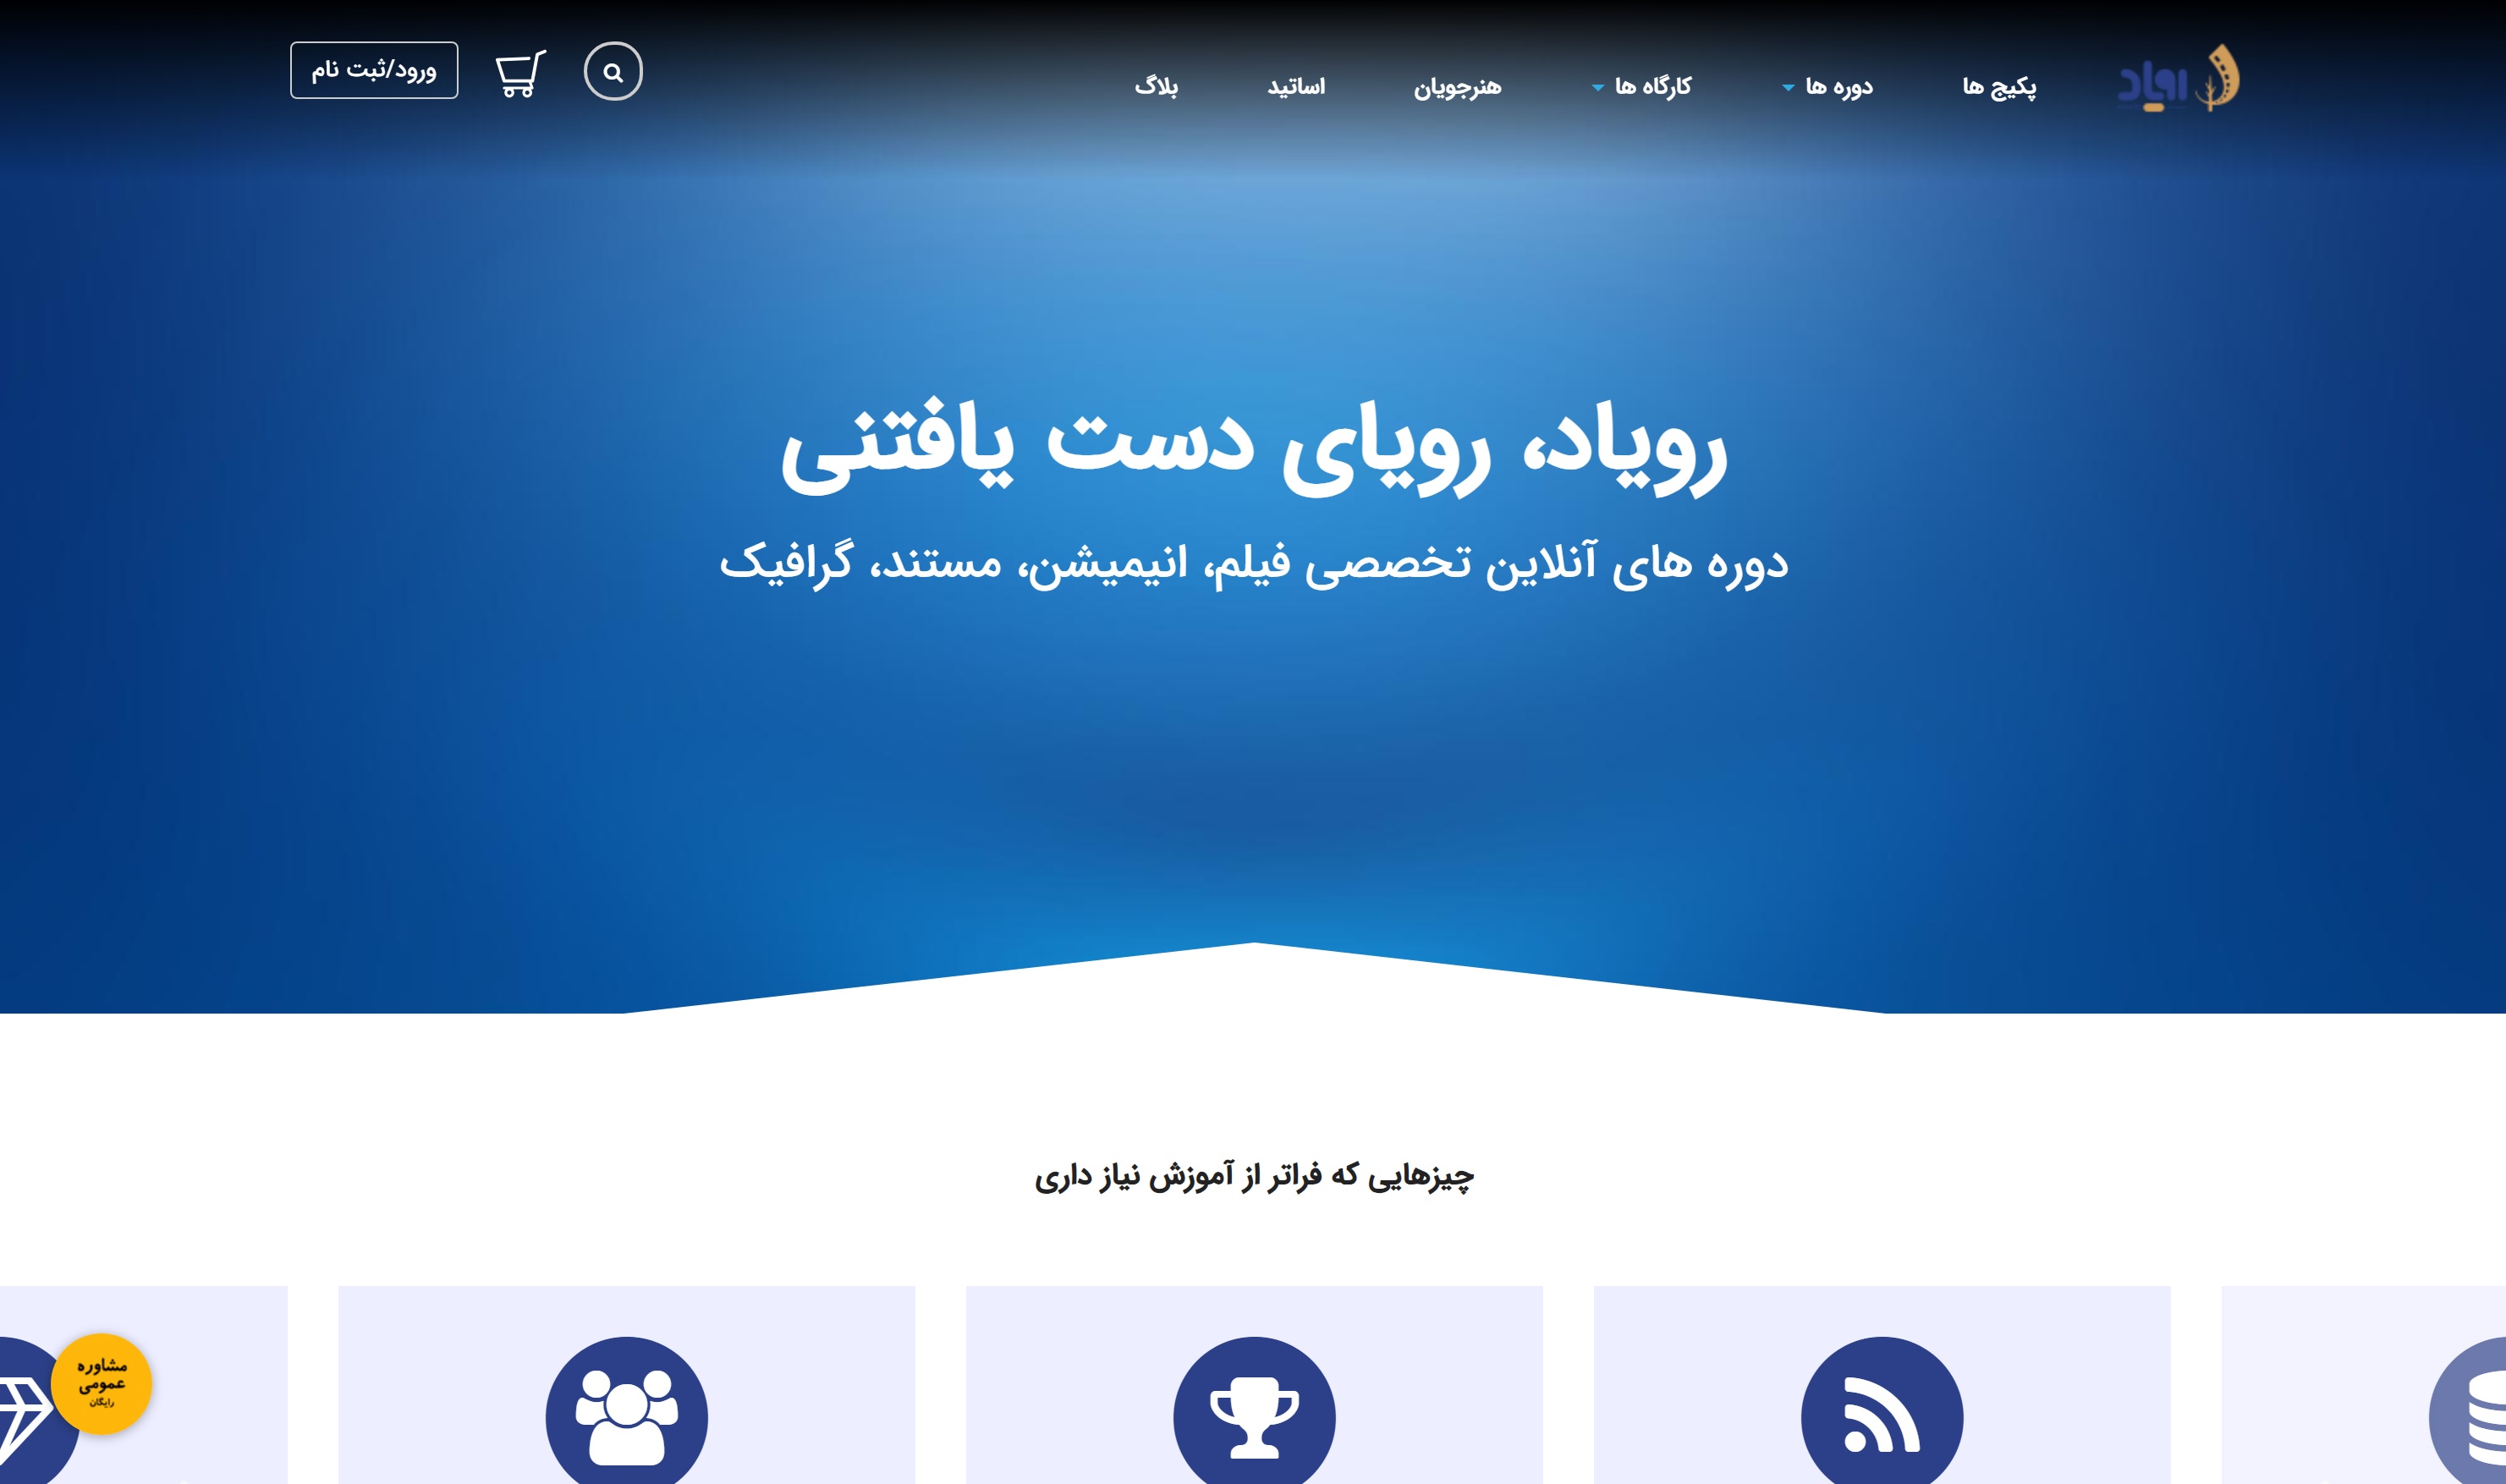 Shahinsoft.ir Royaad Main page